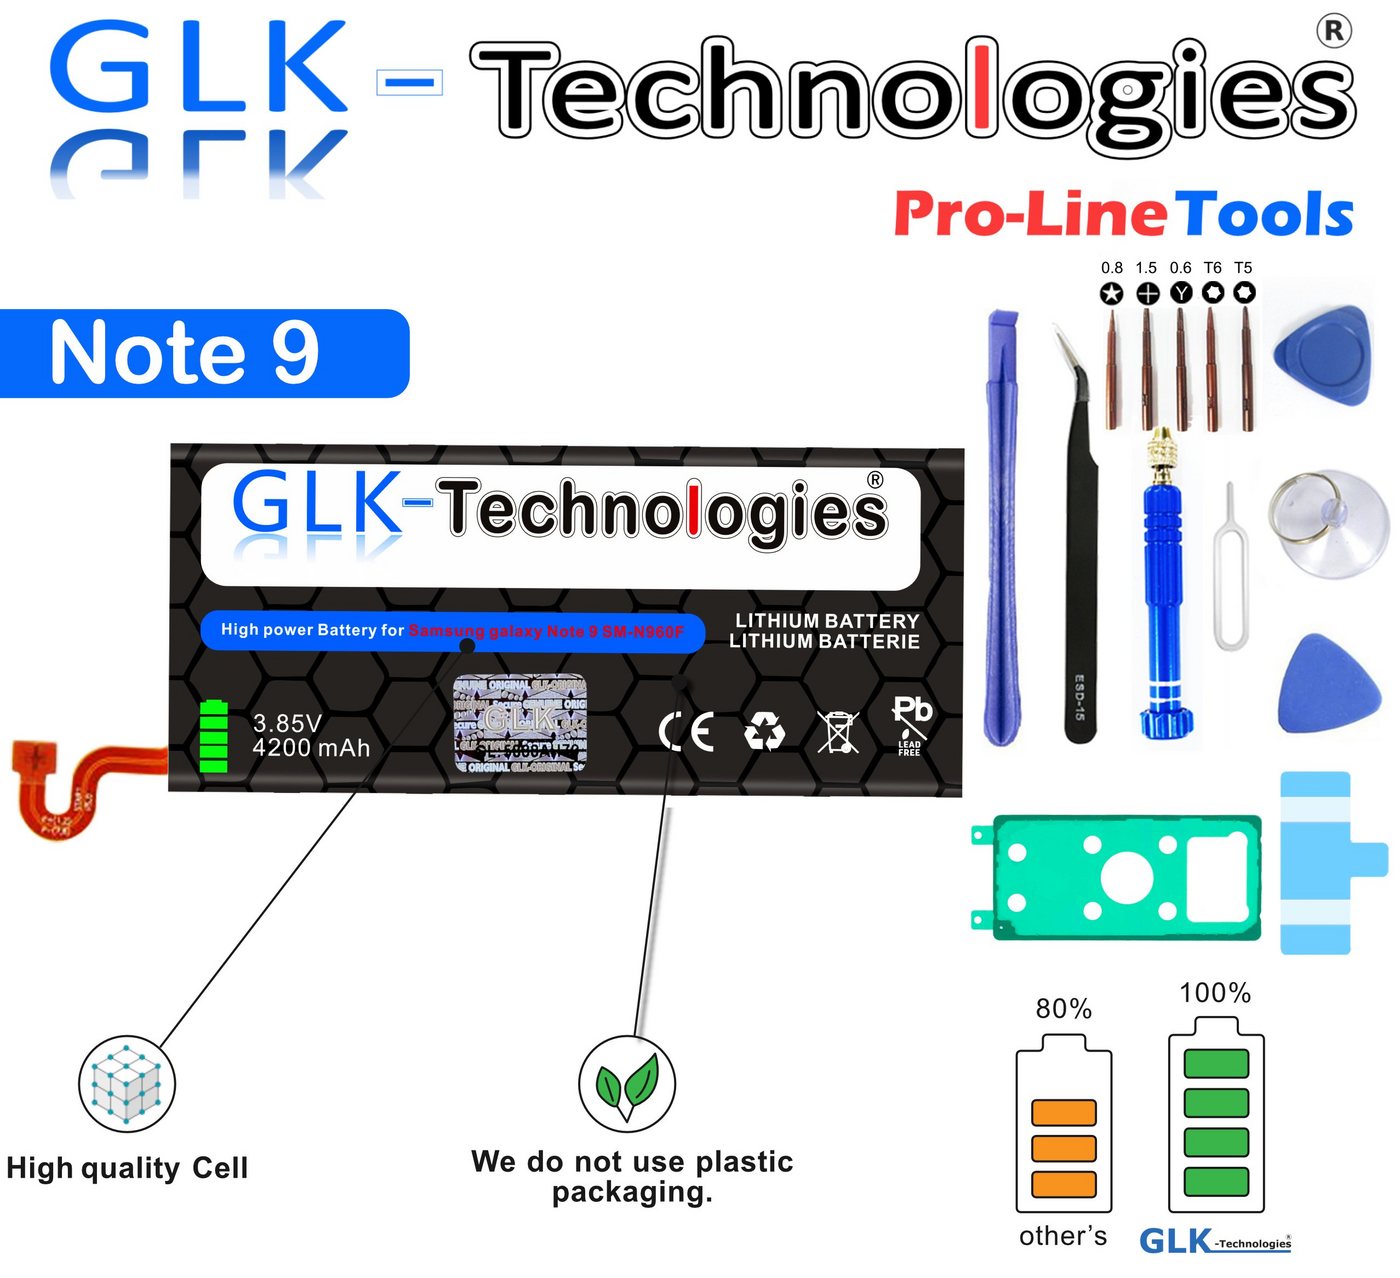 GLK-Technologies High Power Ersatzakku kompatibel mit Samsung Galaxy Note 9 (N960F) EB-BN965ABU, Original GLK-Technologies Battery, accu, 4200 mAh Akku, inkl. Profi Werkzeug Set Kit NUE Smartphone-Akku 4200 mAh (3.85 V) von GLK-Technologies